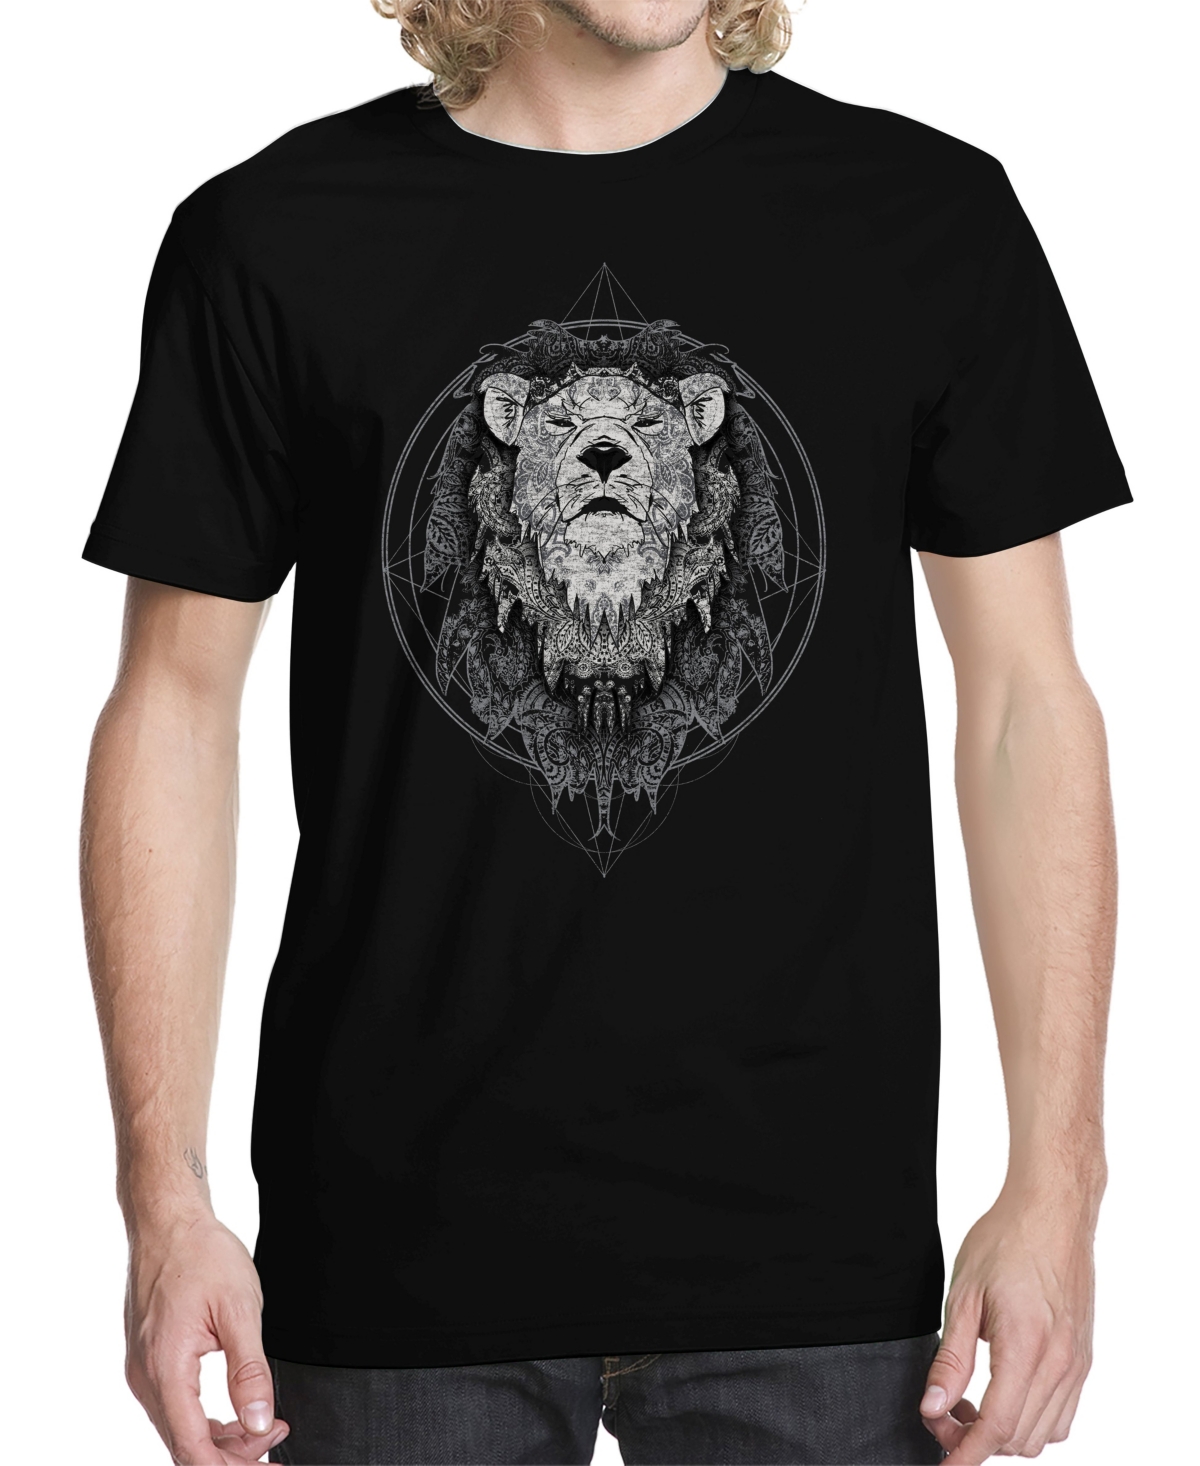 Men's Sacred King Graphic T-shirt - Black